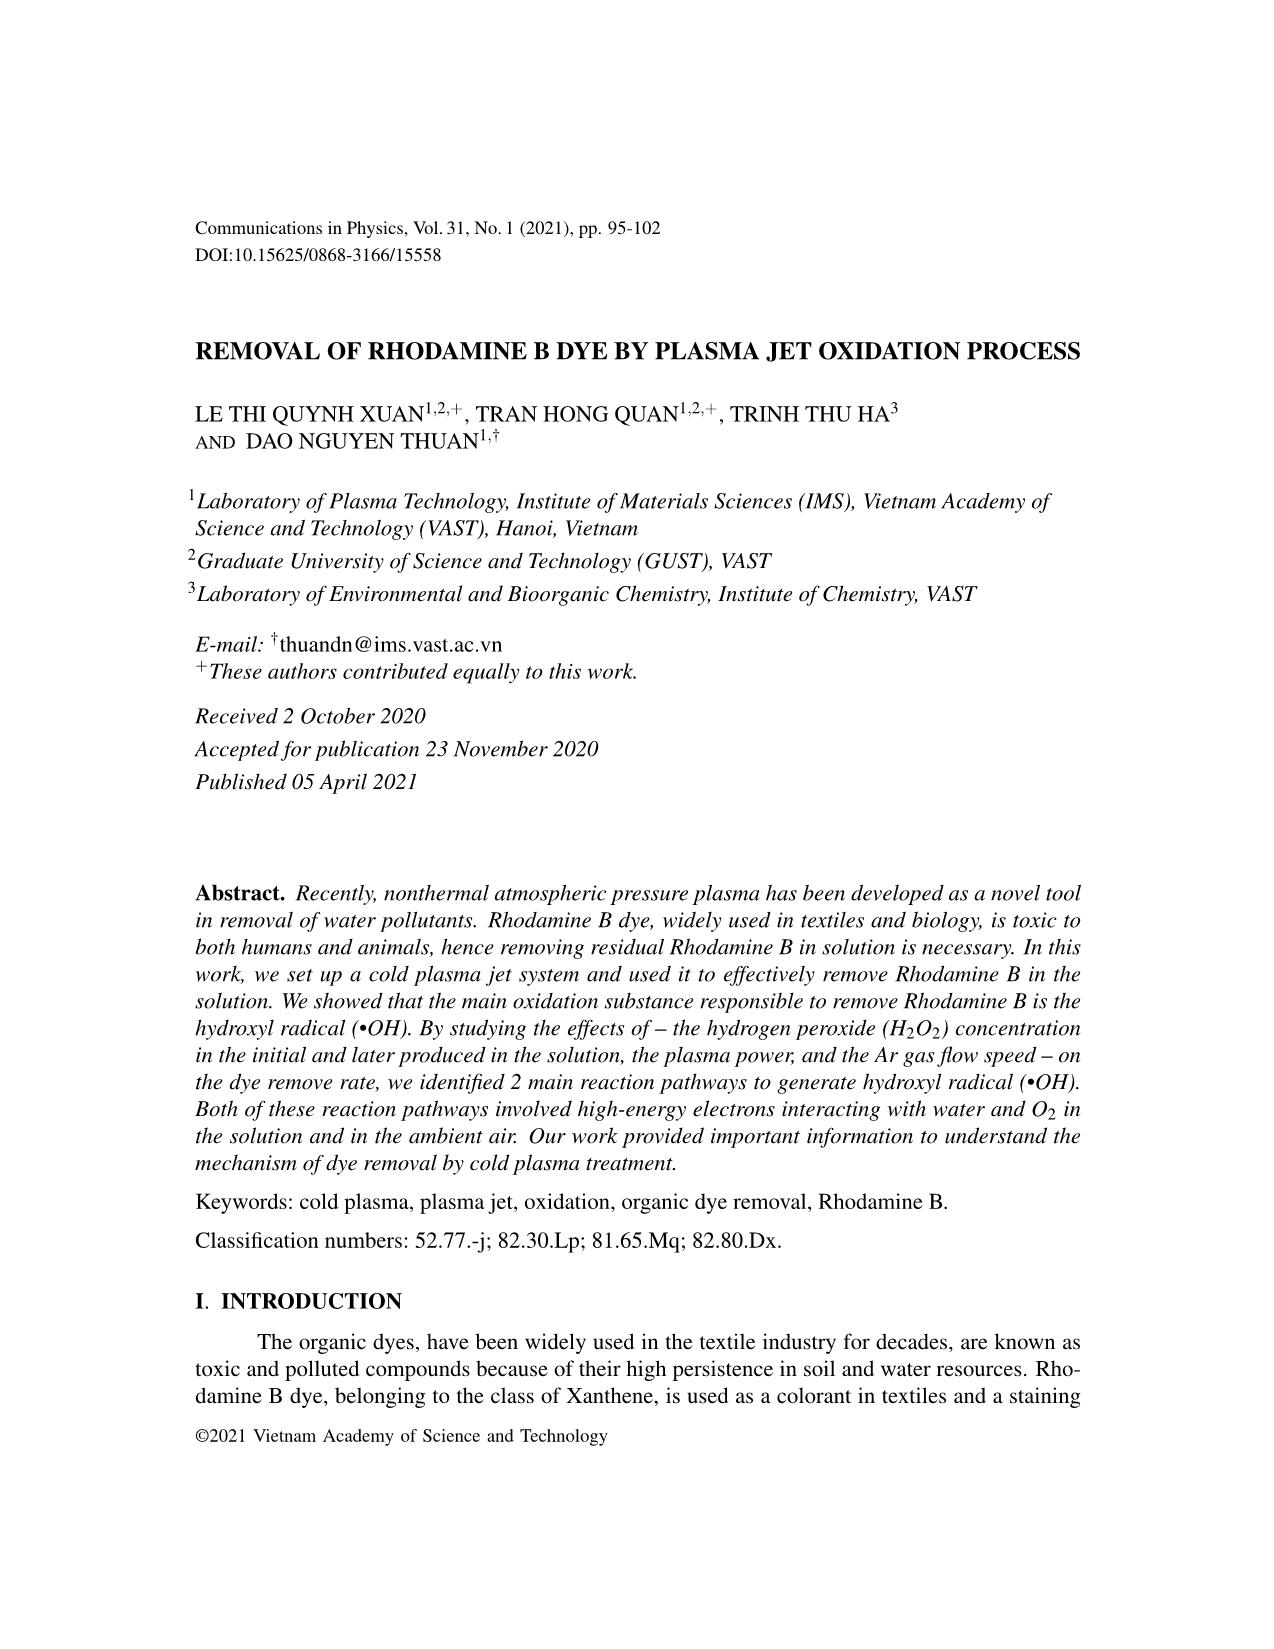 Removal of rhodamine B dye by plasma jet oxidation process trang 1